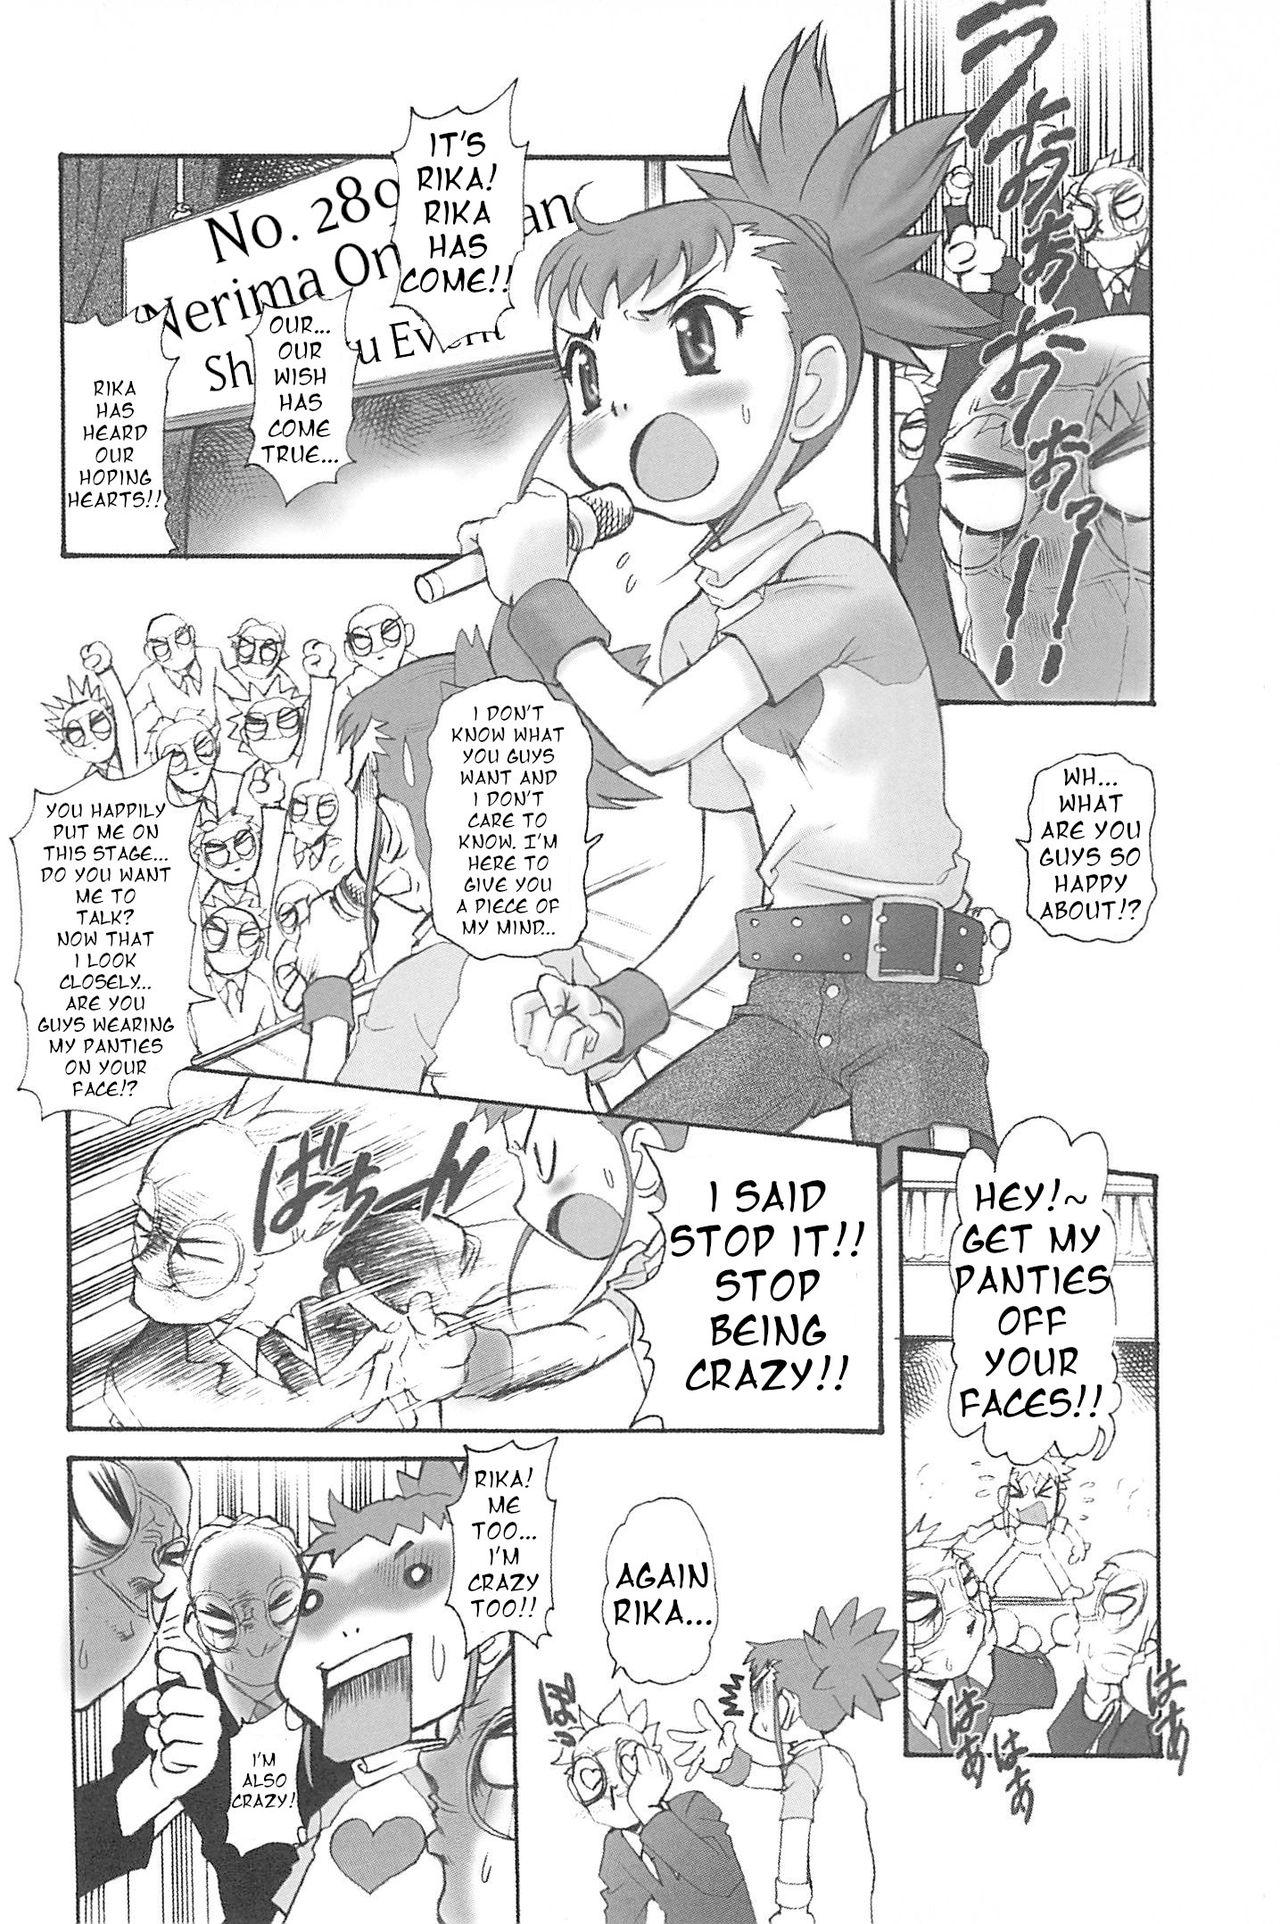 Caliente Cranial Business Trip! Nerima's Onii-chan!! - Digimon Digimon tamers Travesti - Page 2